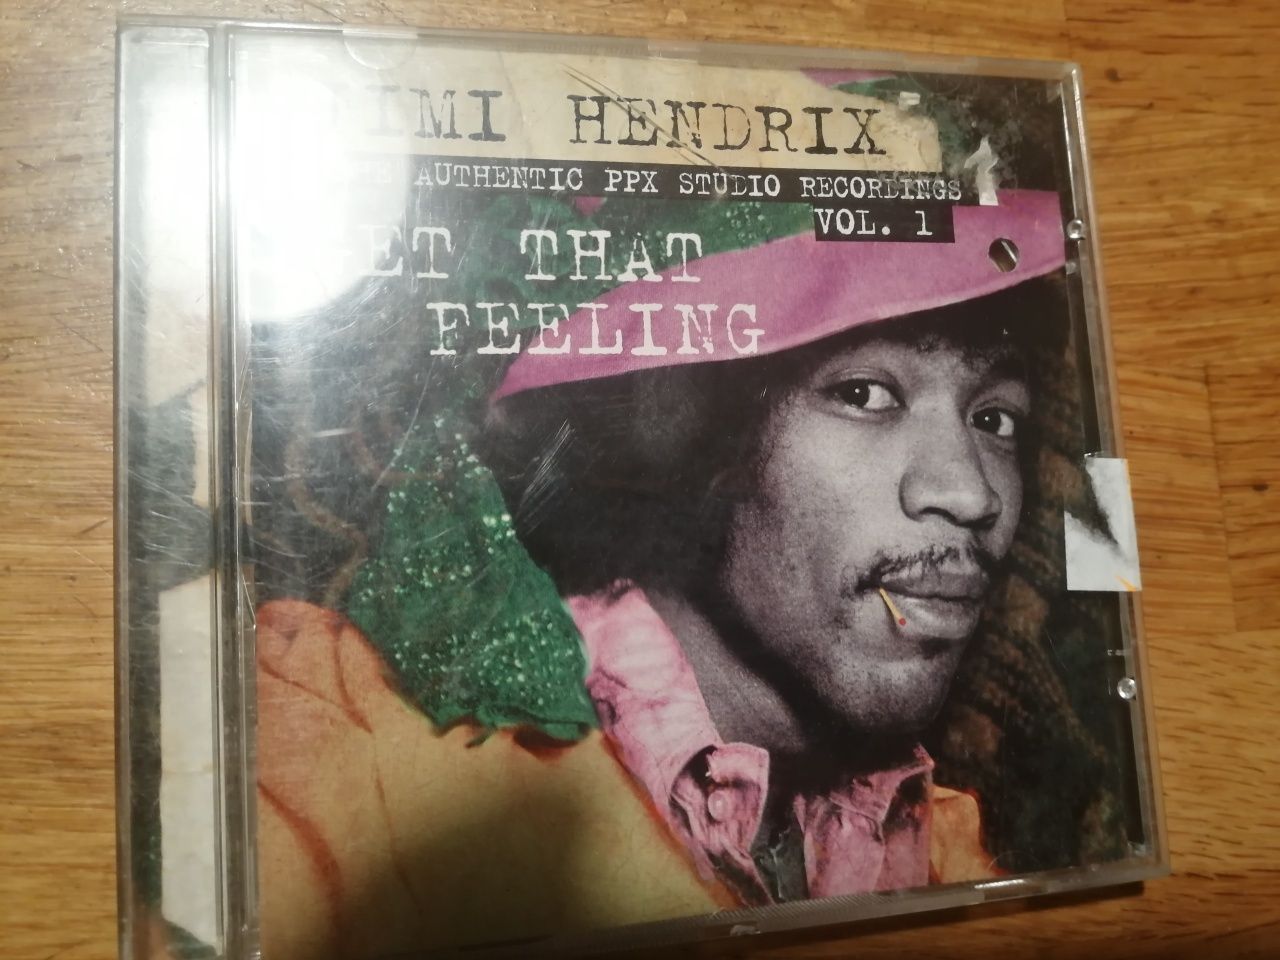 Jimmy Hendrix. Get that feeling. Vol 1.CD